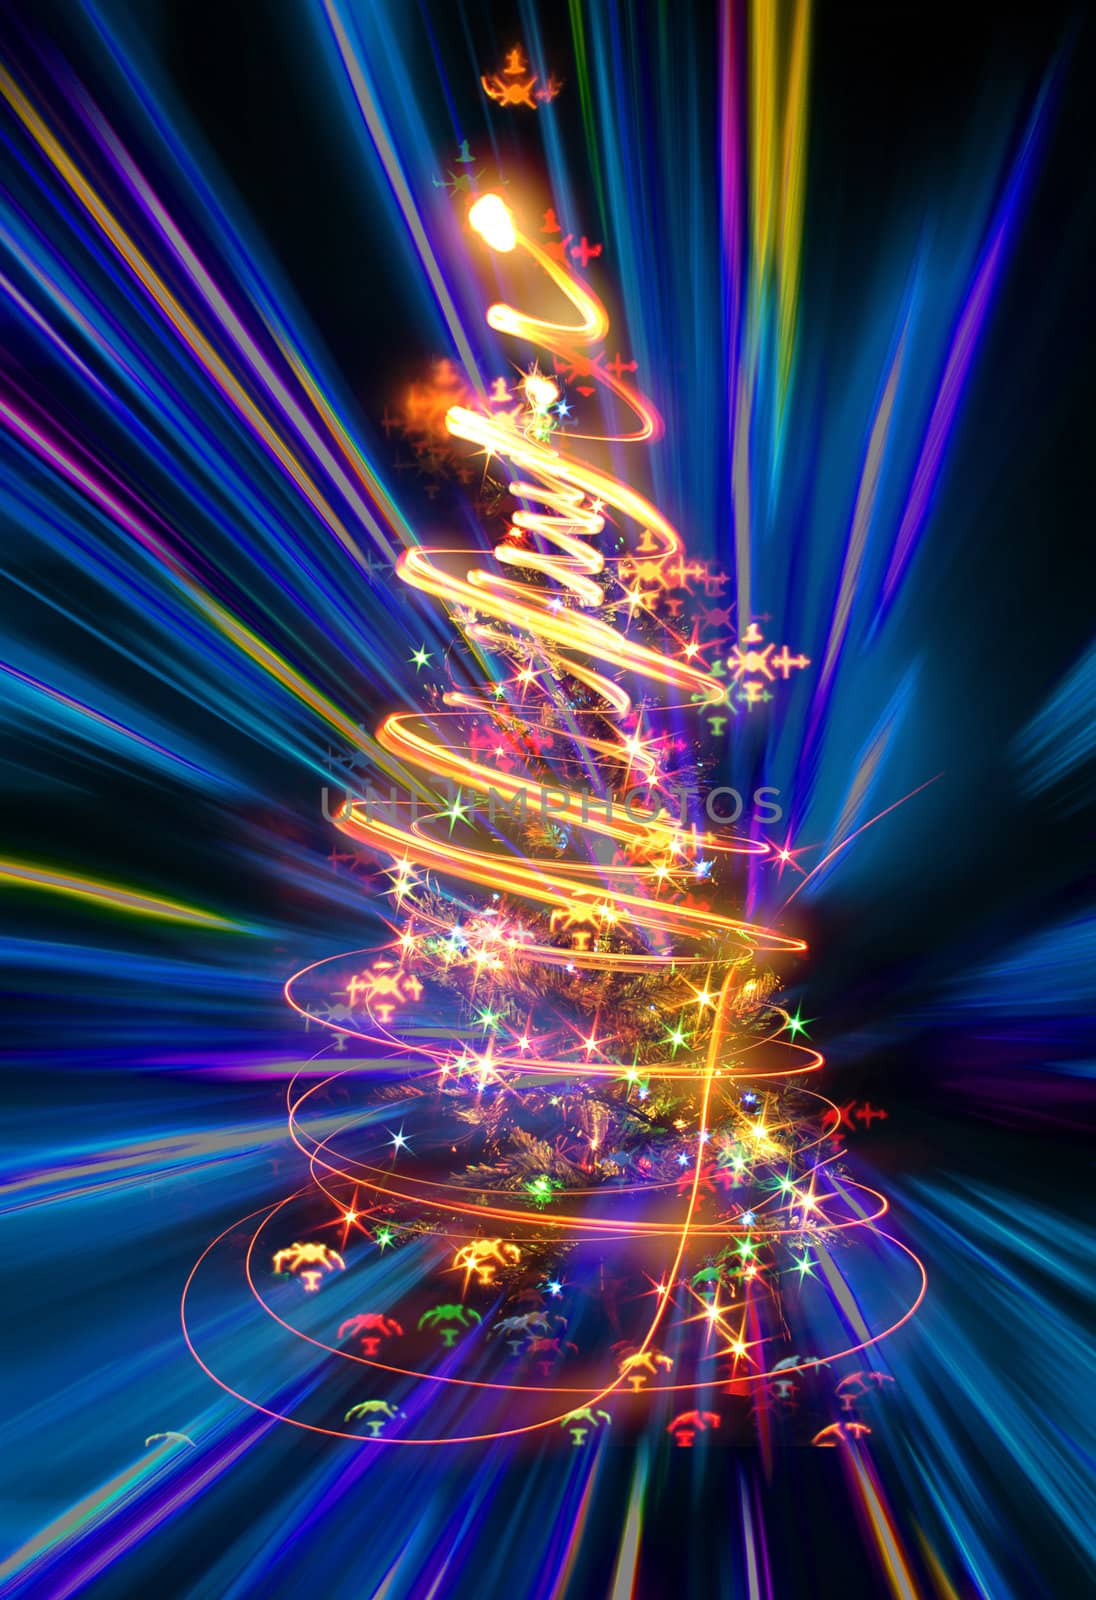 christmas tree (lights) on the black background